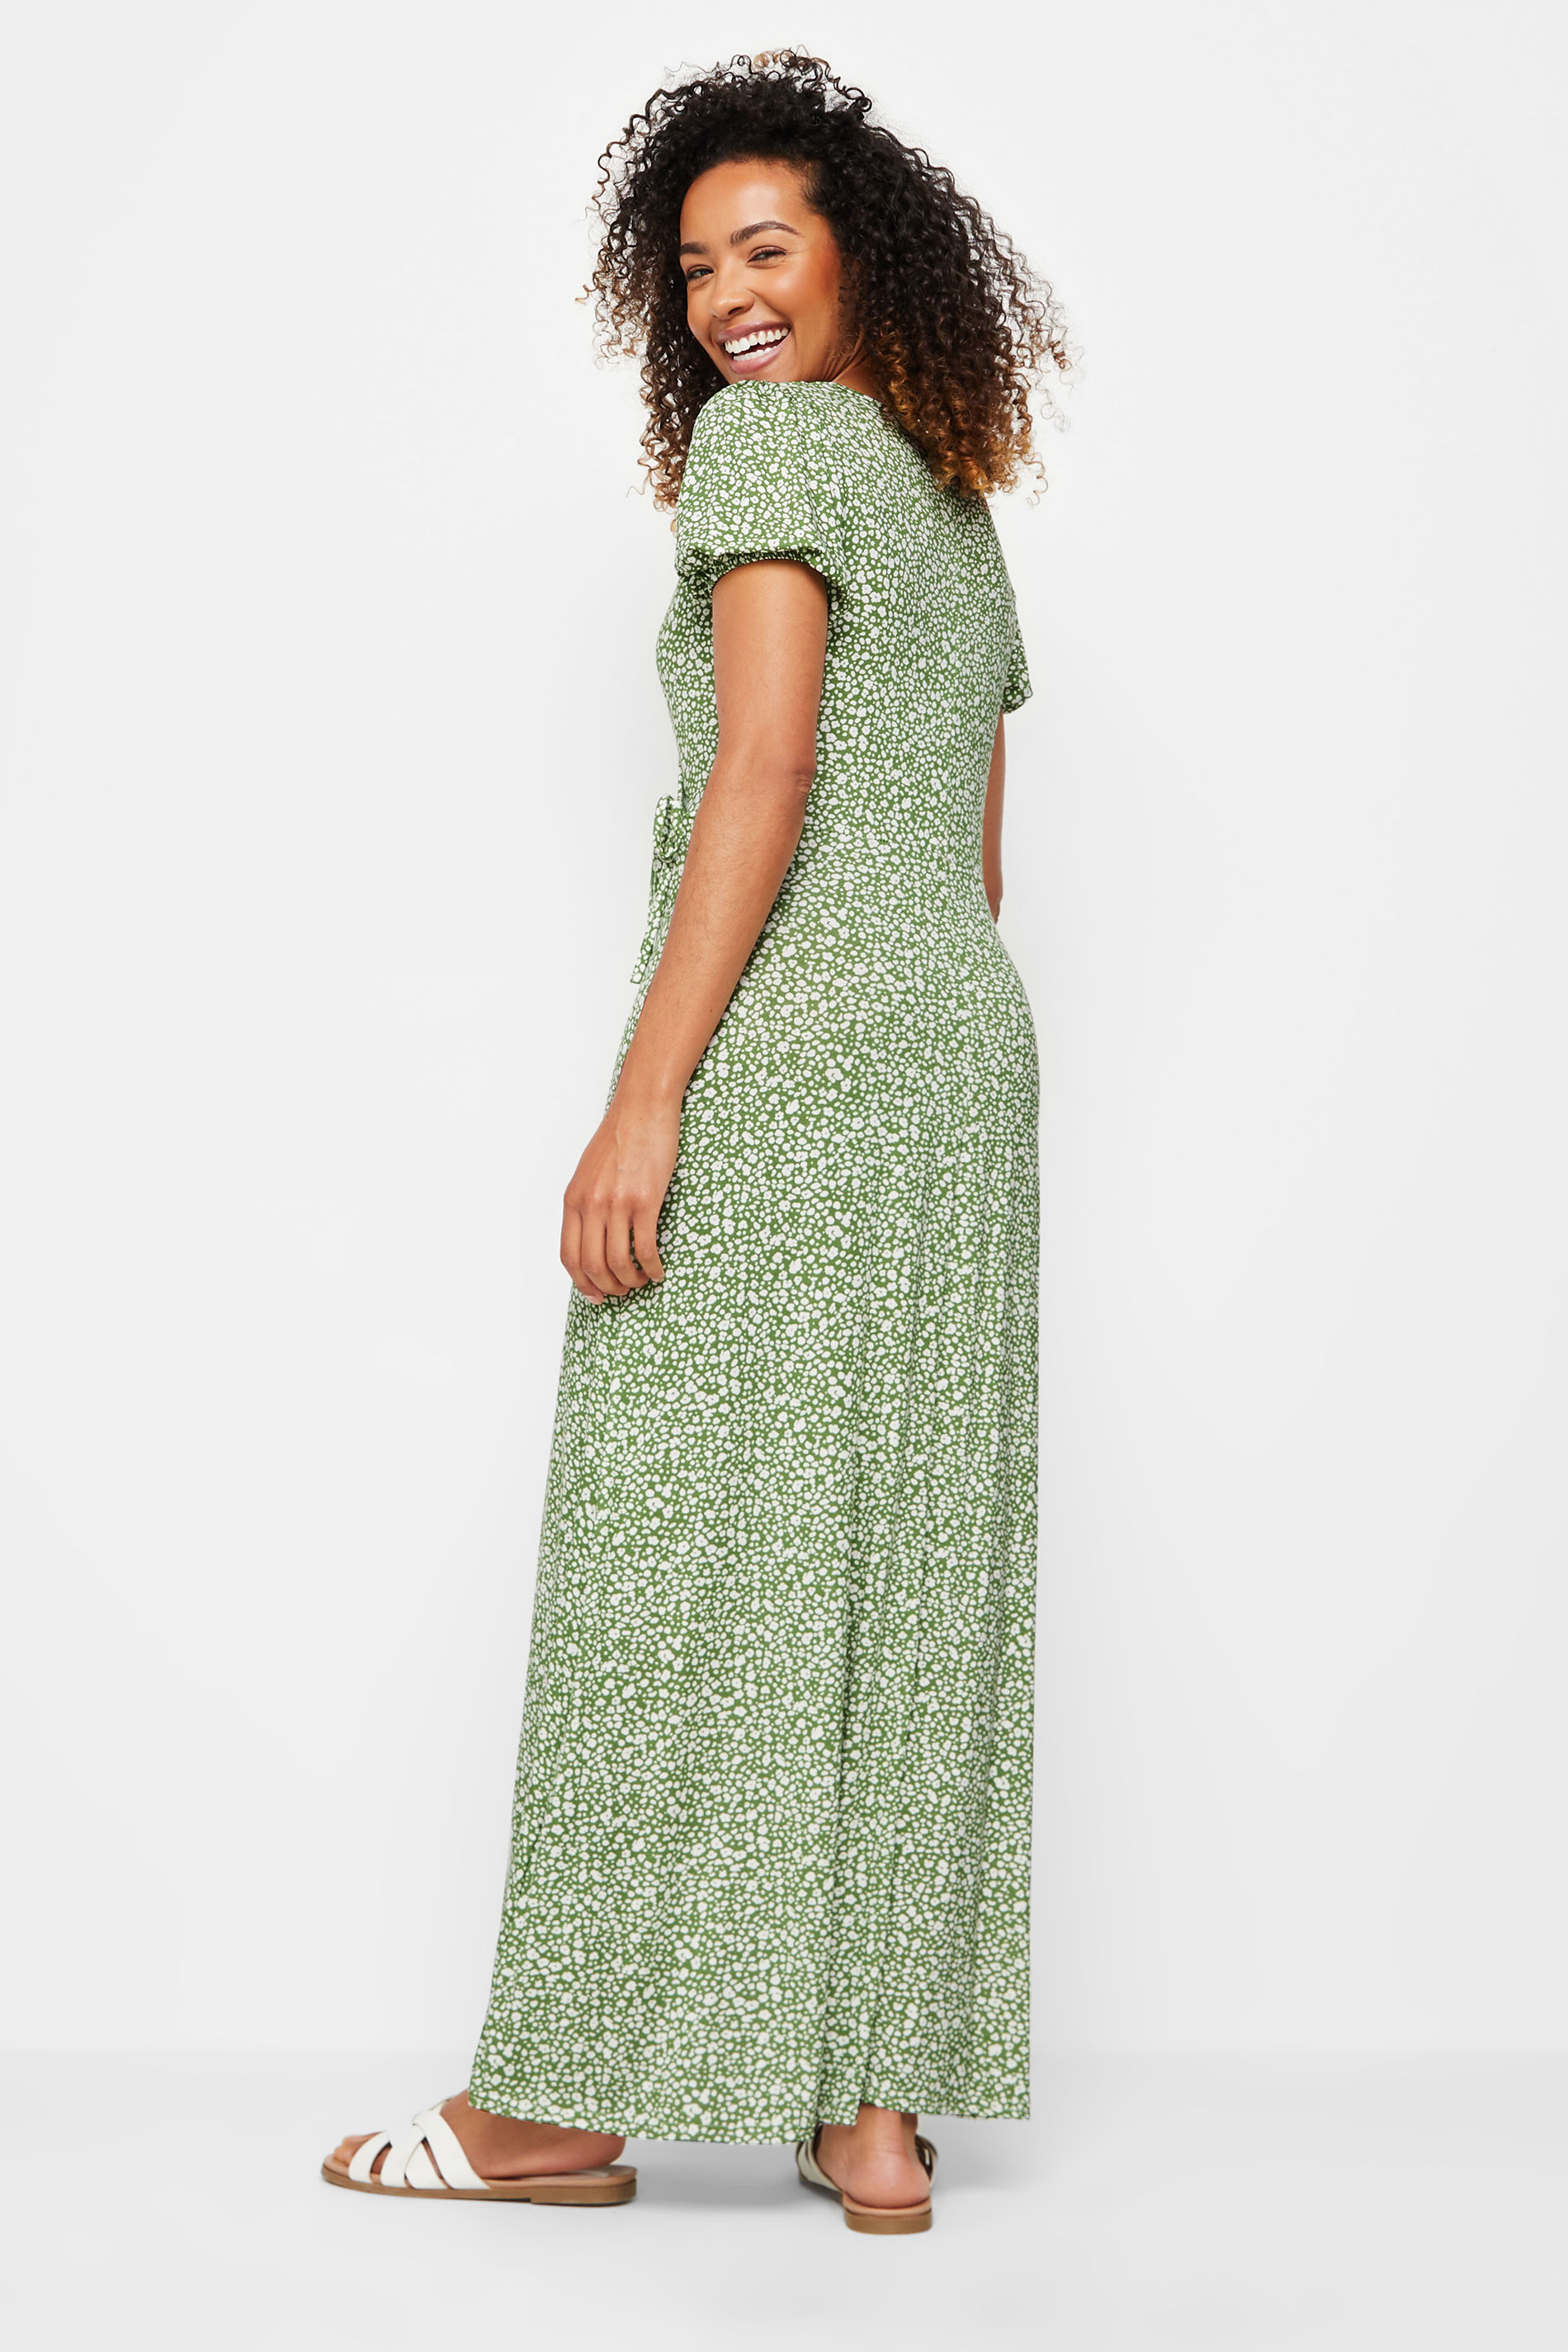 M&Co Green Ditsy Floral Print Maxi Dress | M&Co 3